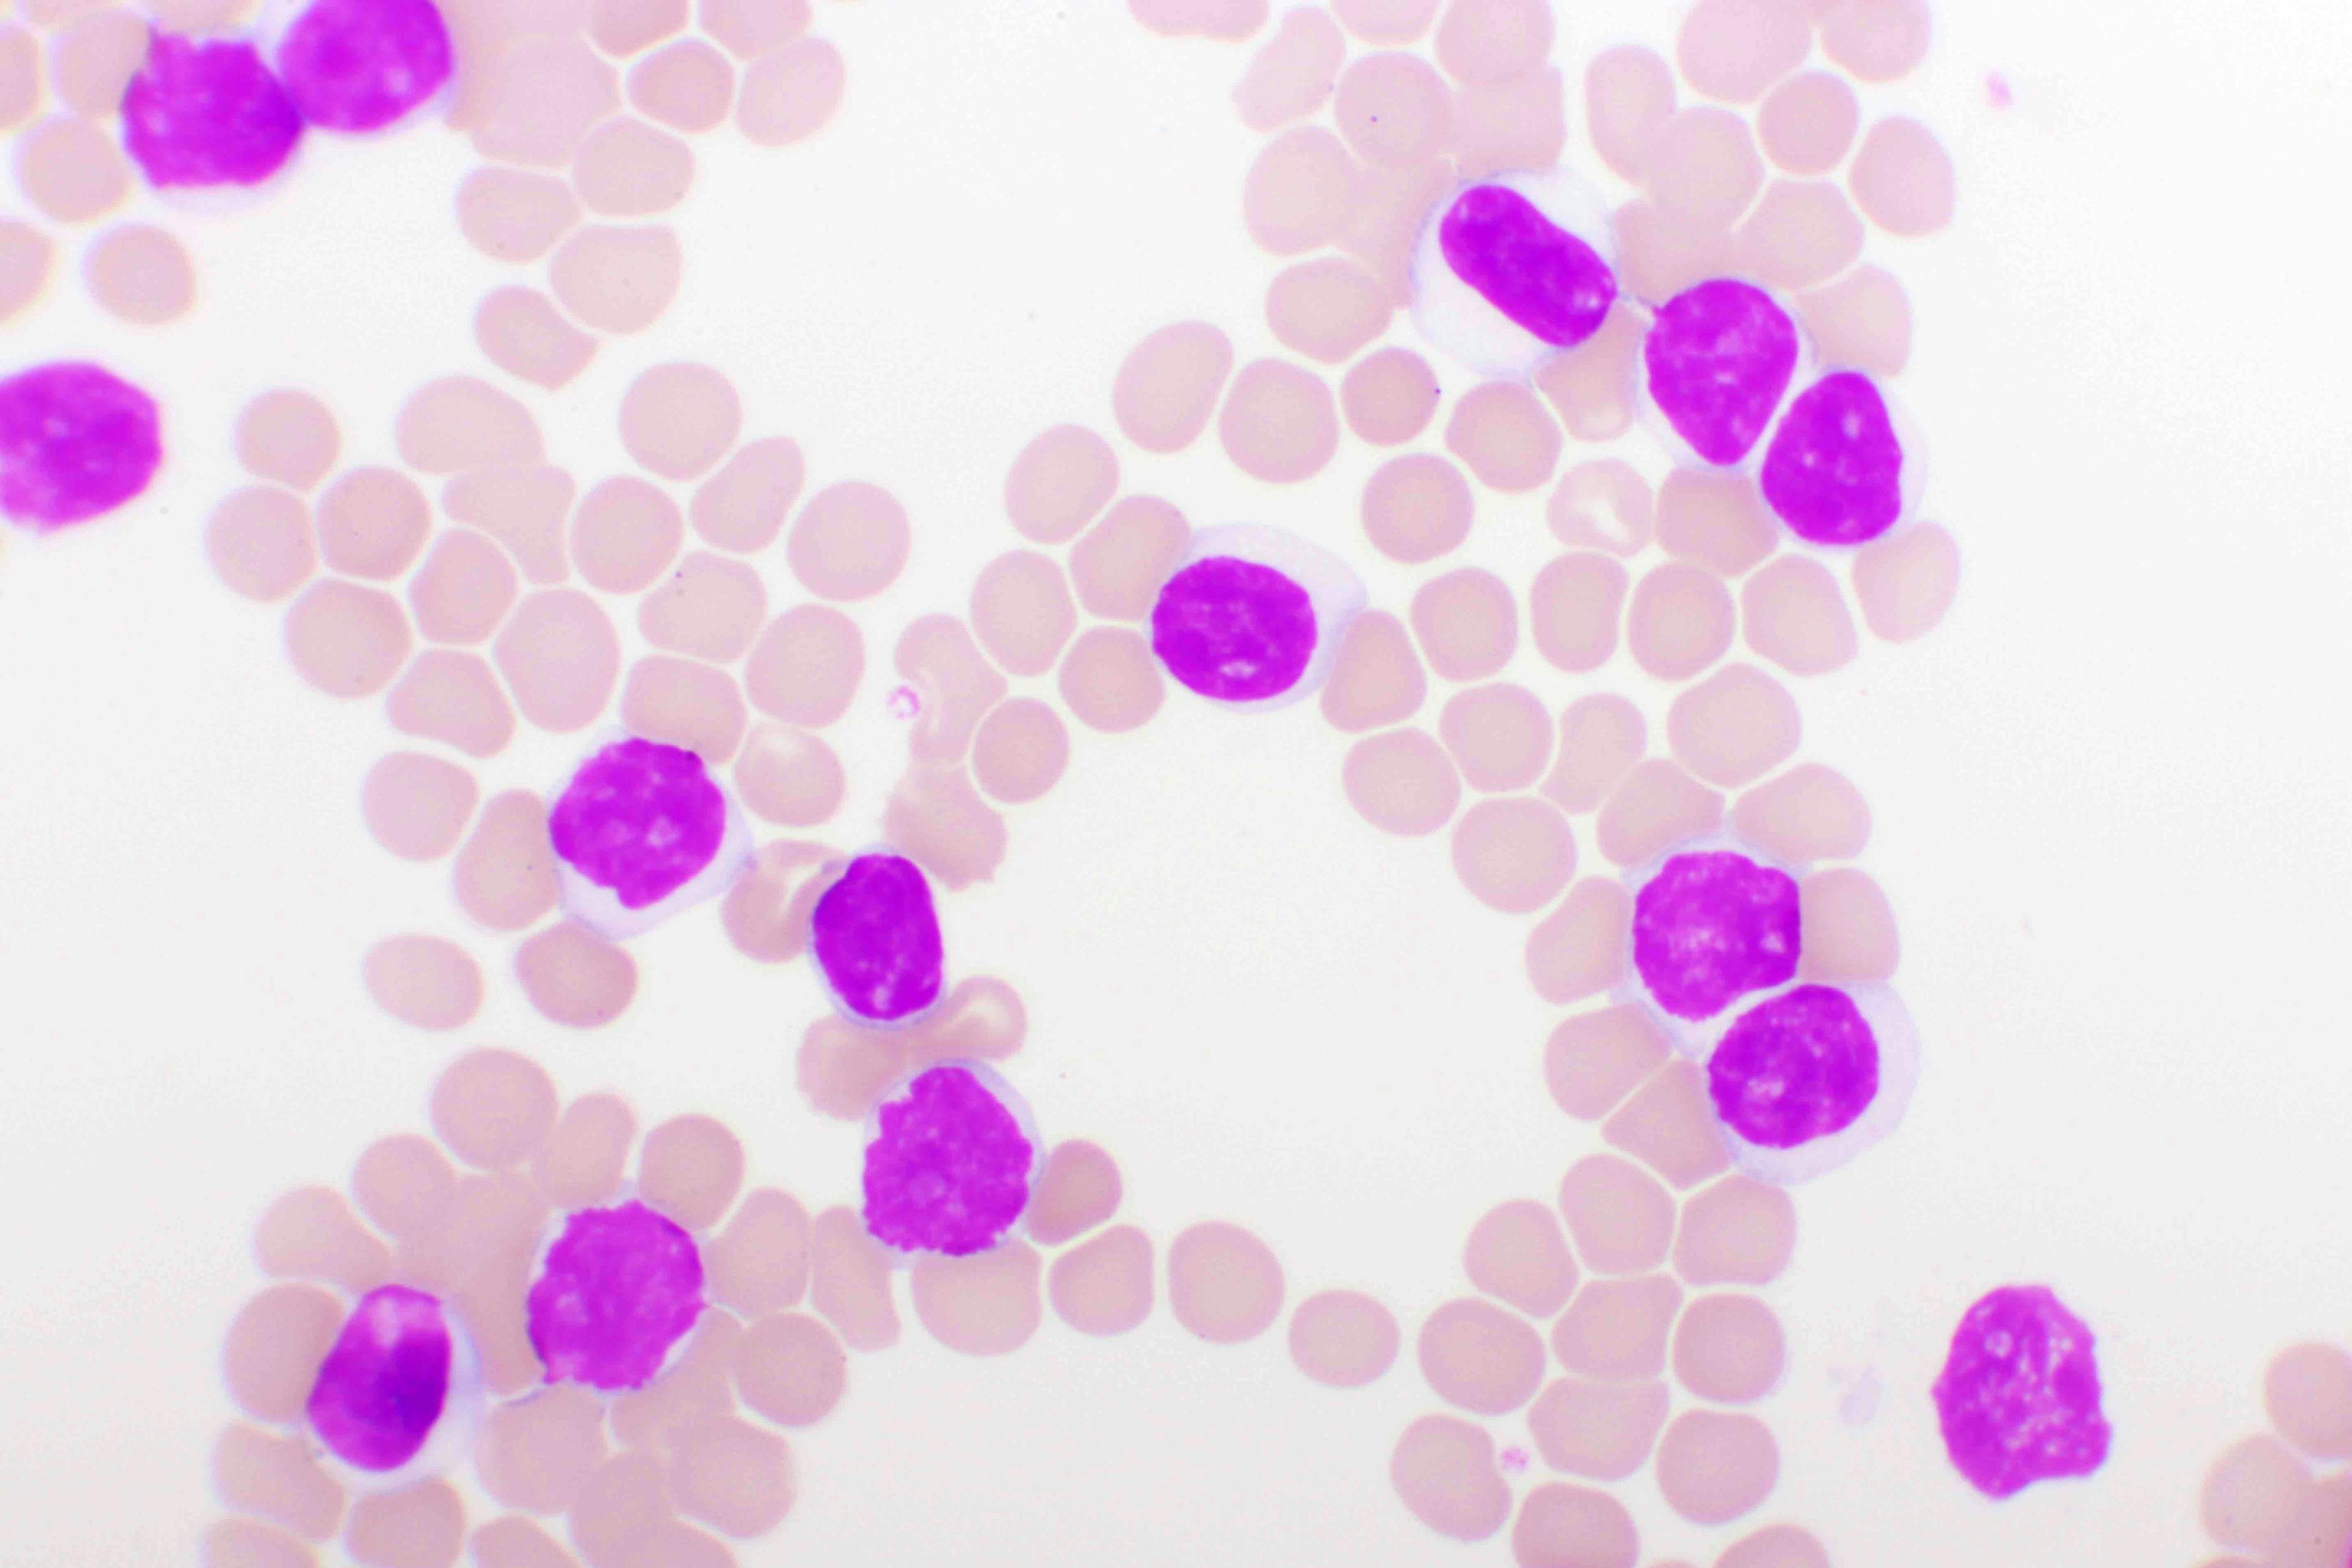 Chronic lymphocytic leukemia | Image Credit: © jarun011 - stock.adobe.com